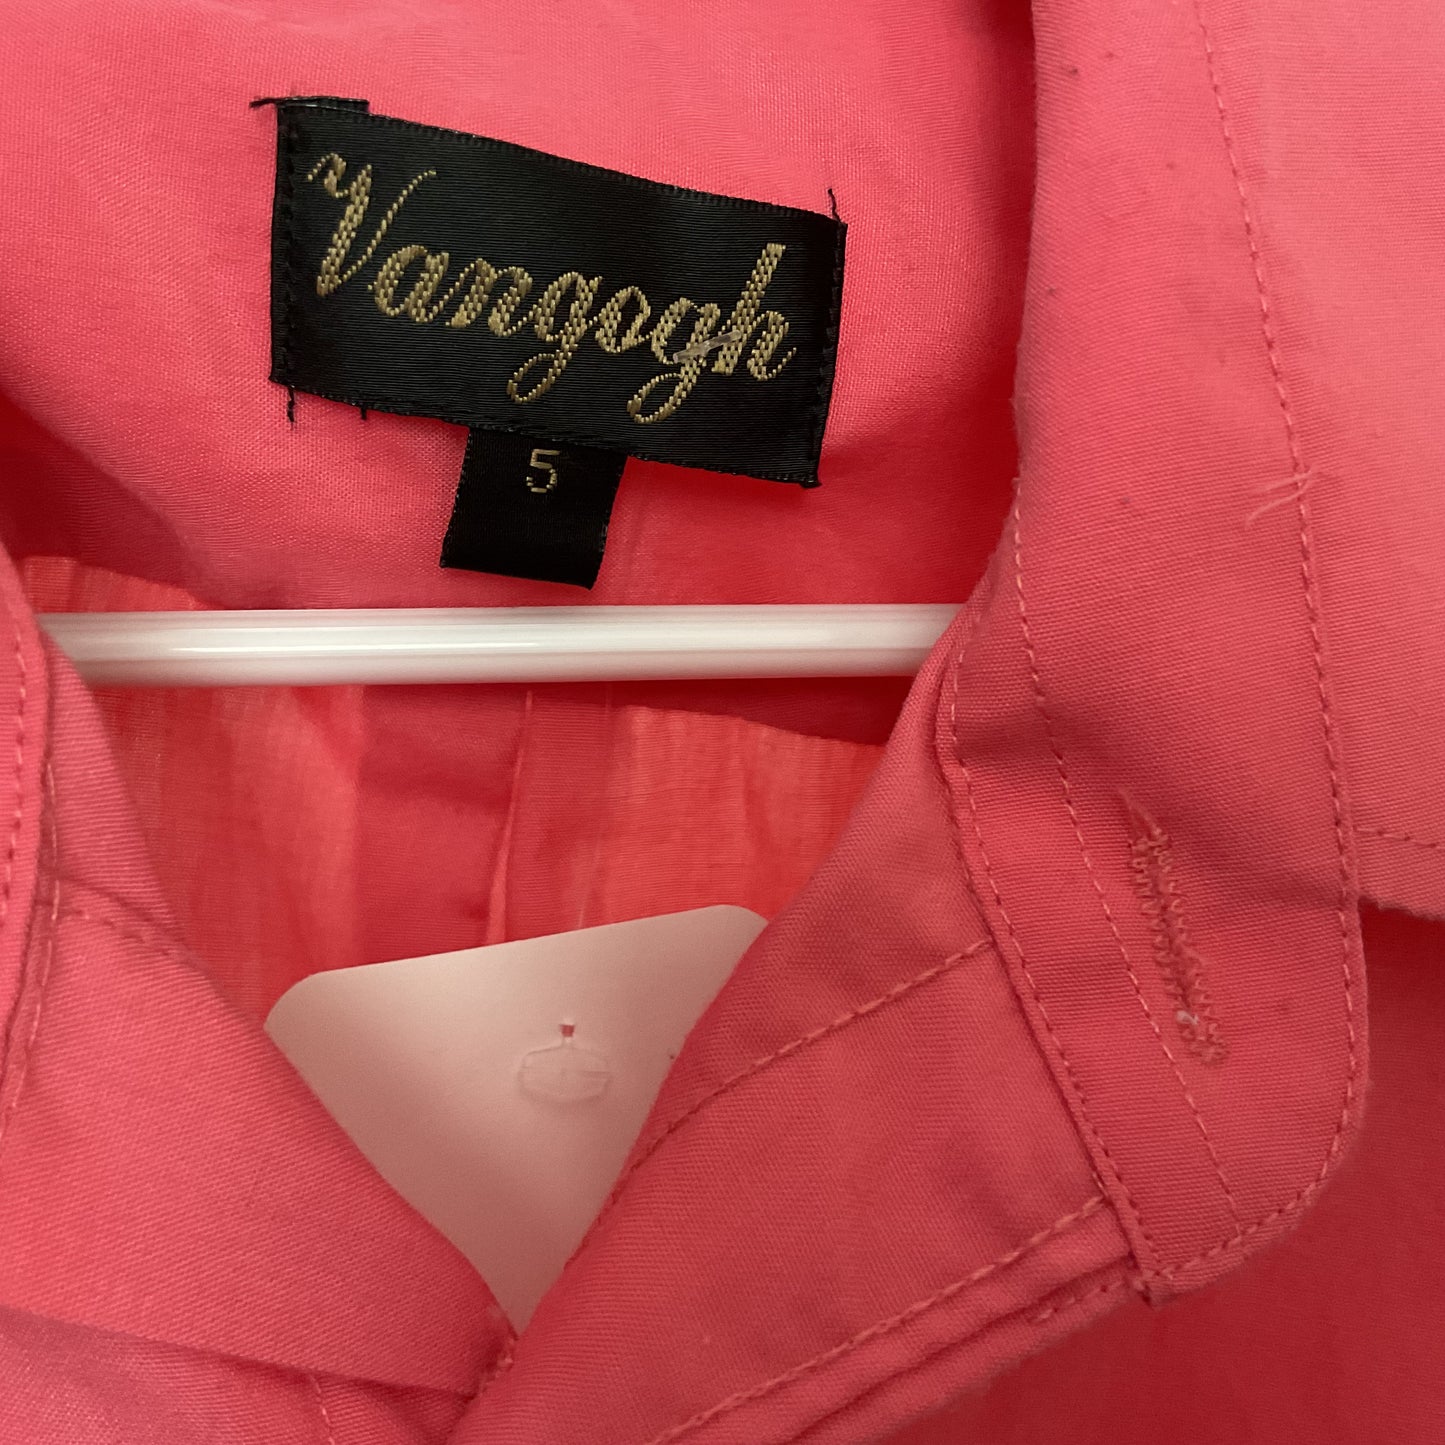 Vangogh Long Sleeve Botton Down Children’s Shirt Size 5.